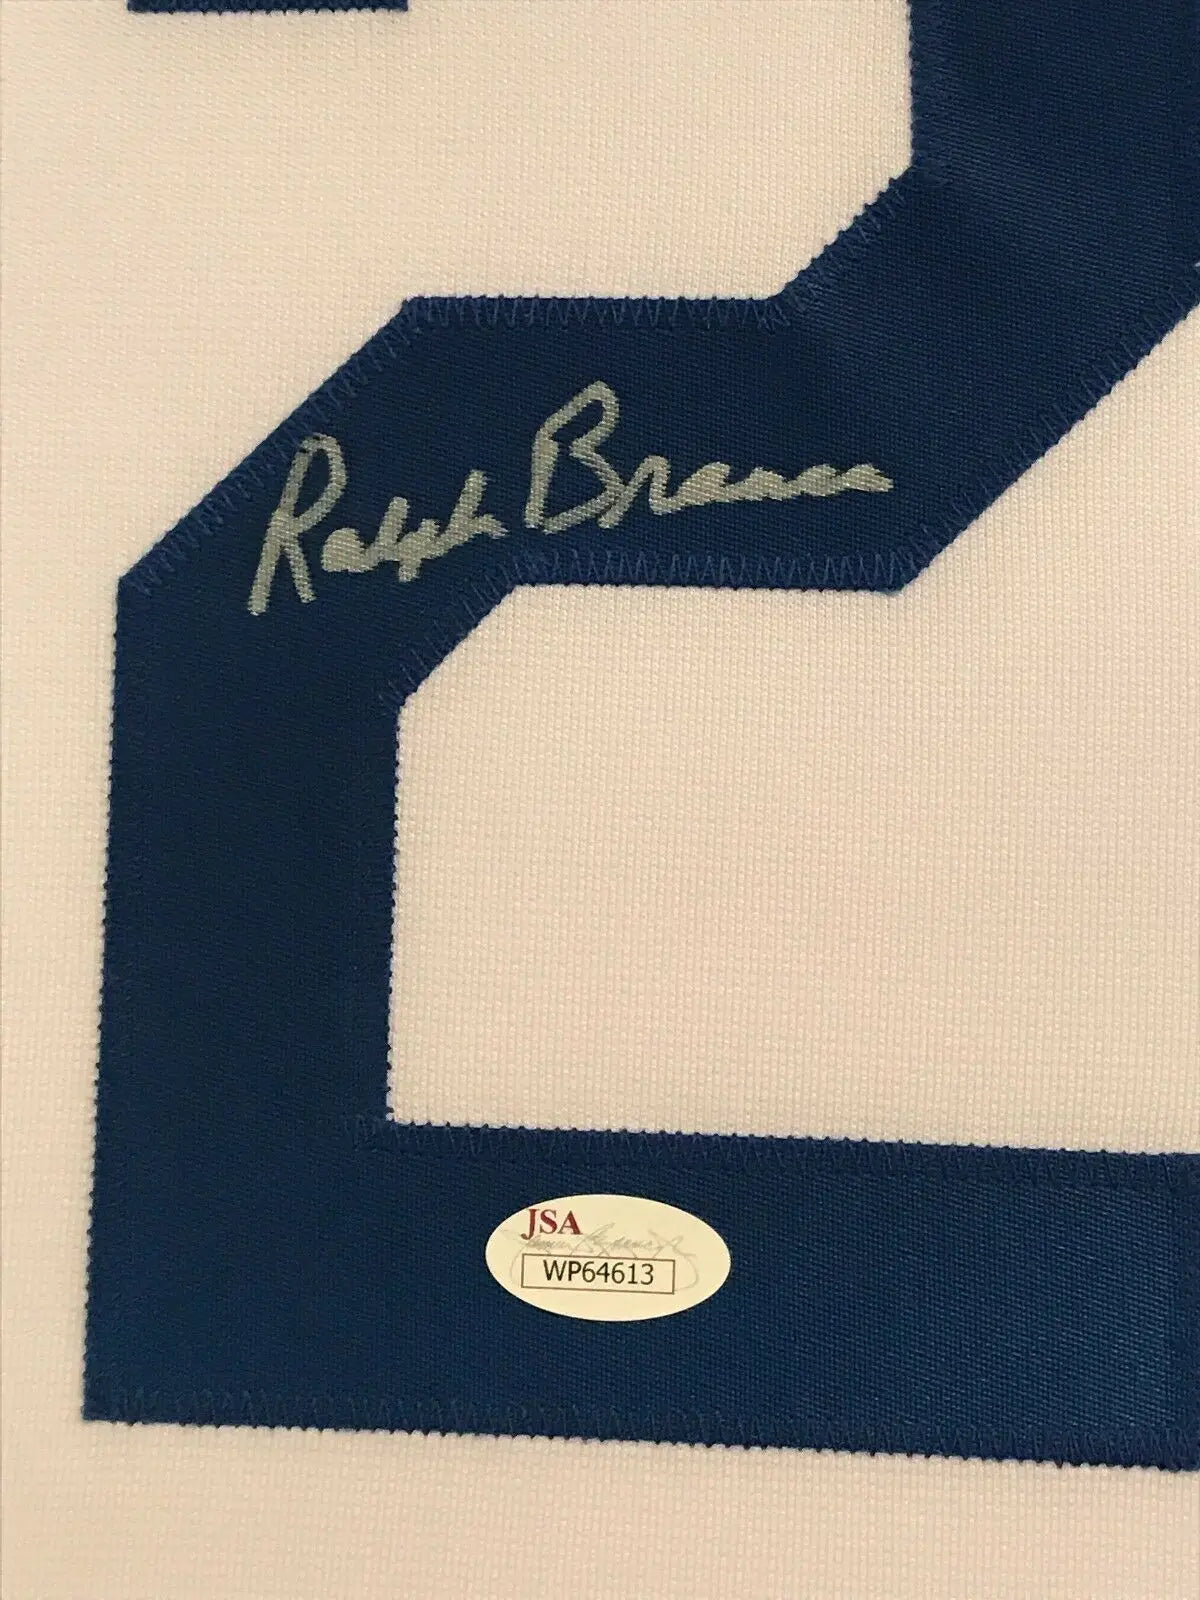 Framed Ralph Branca Autographed Signed Brooklyn Dodgers Jersey Jsa